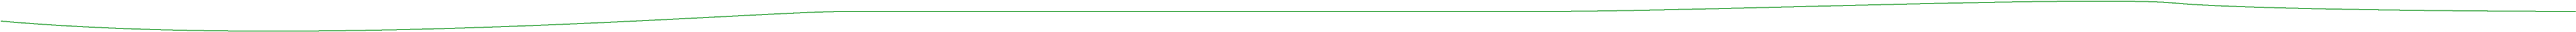 Groene lijn